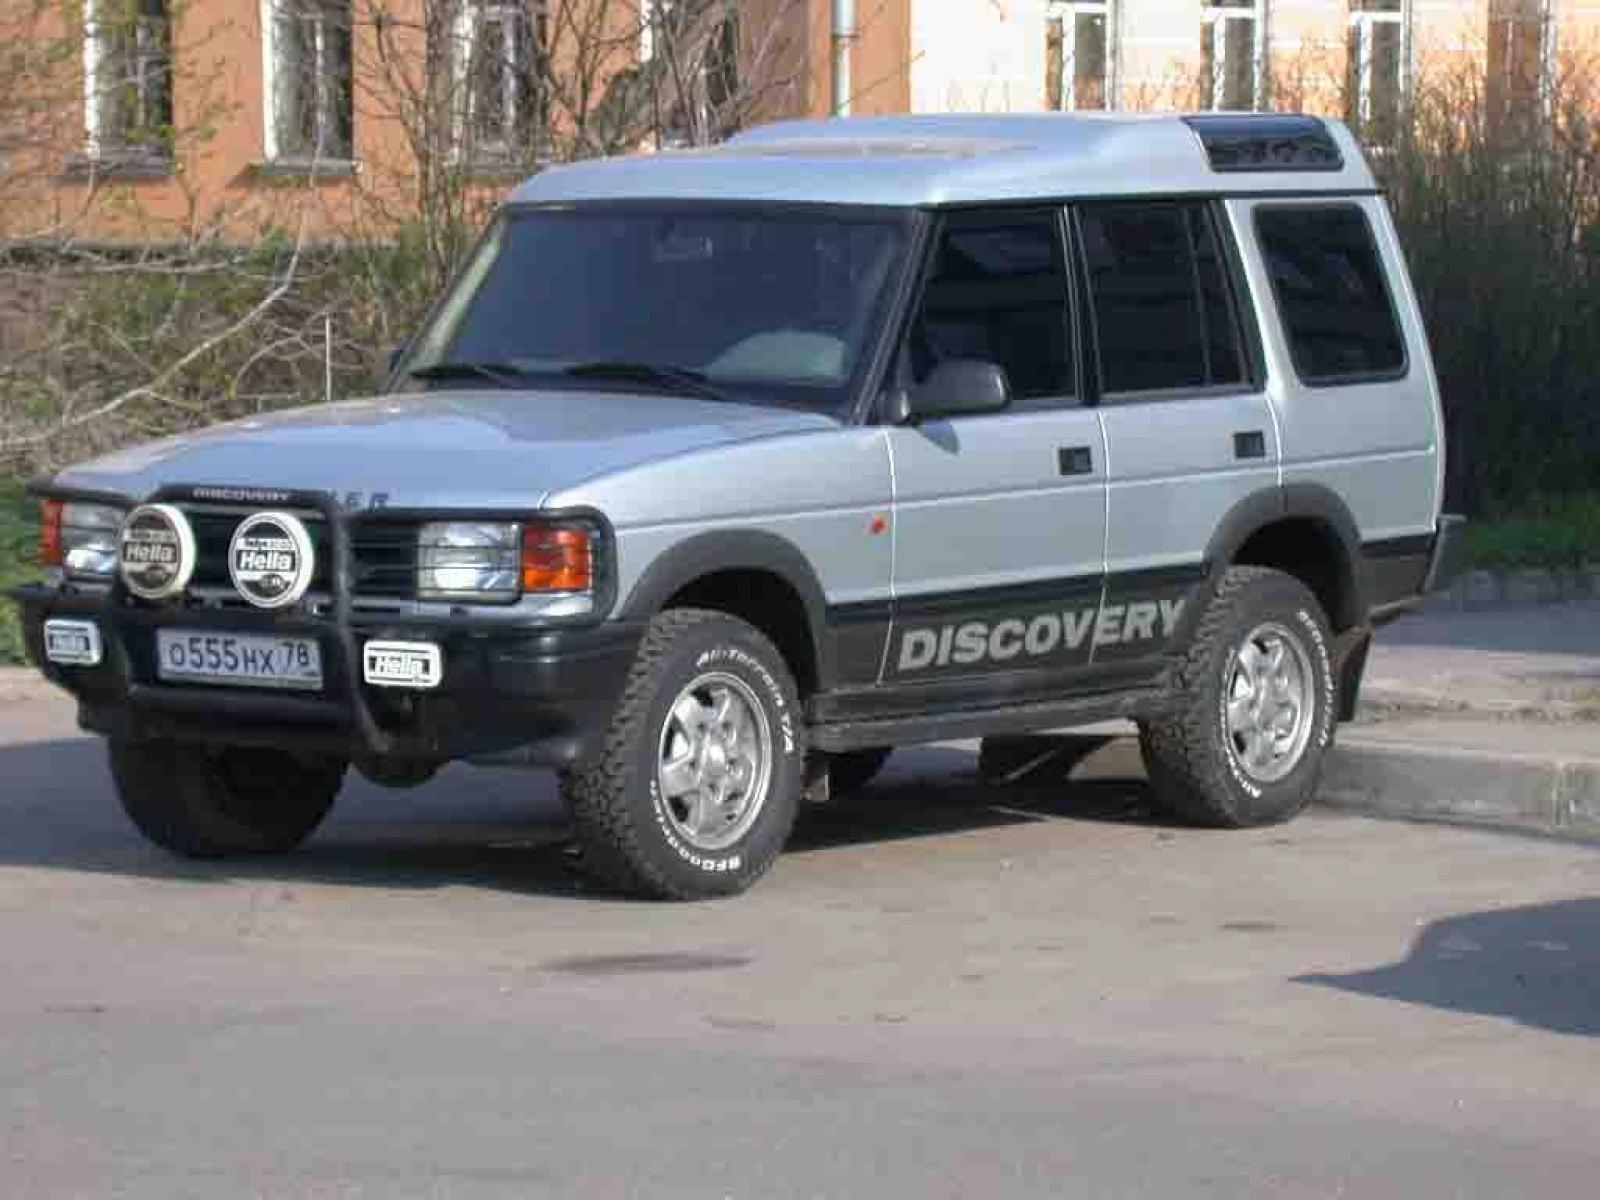 Дискавери 12. Land Rover Discovery 1996. Range Rover 1996. Ленд Ровер 1996. Рендж Ровер 1996.